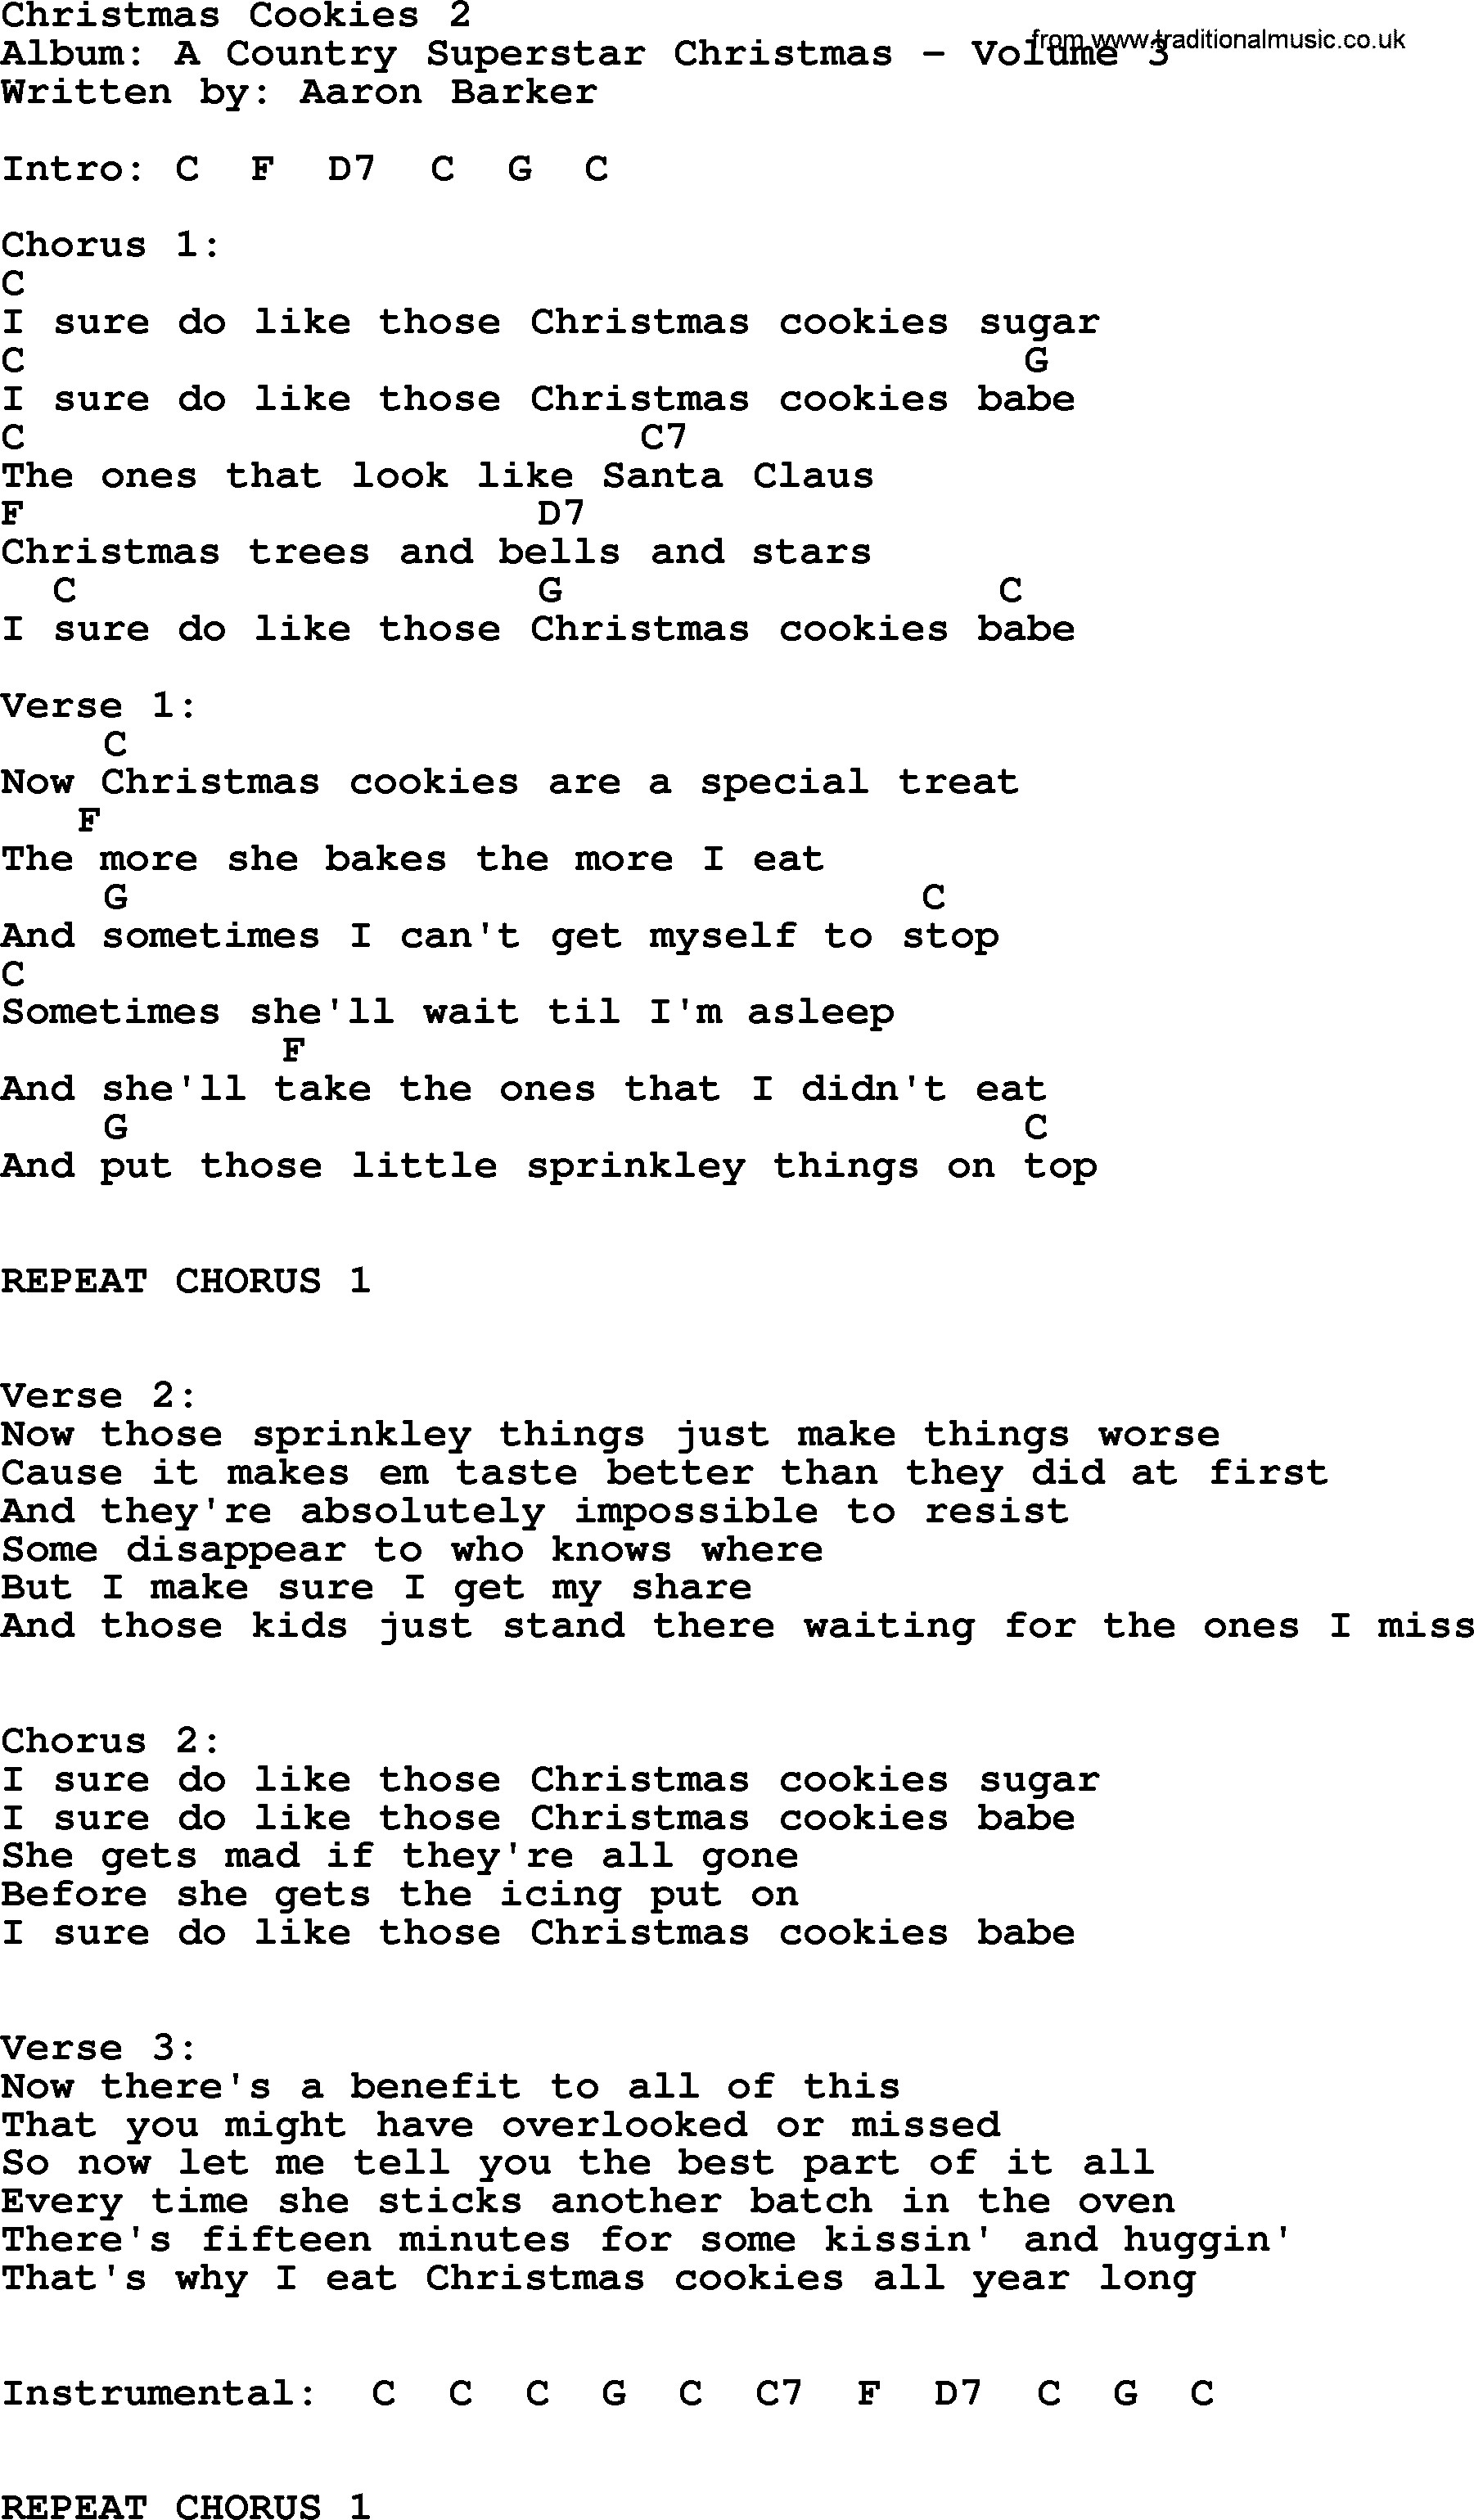 Christmas Cookies Lyrics
 Christmas Cookies 2 by George Strait lyrics and chords